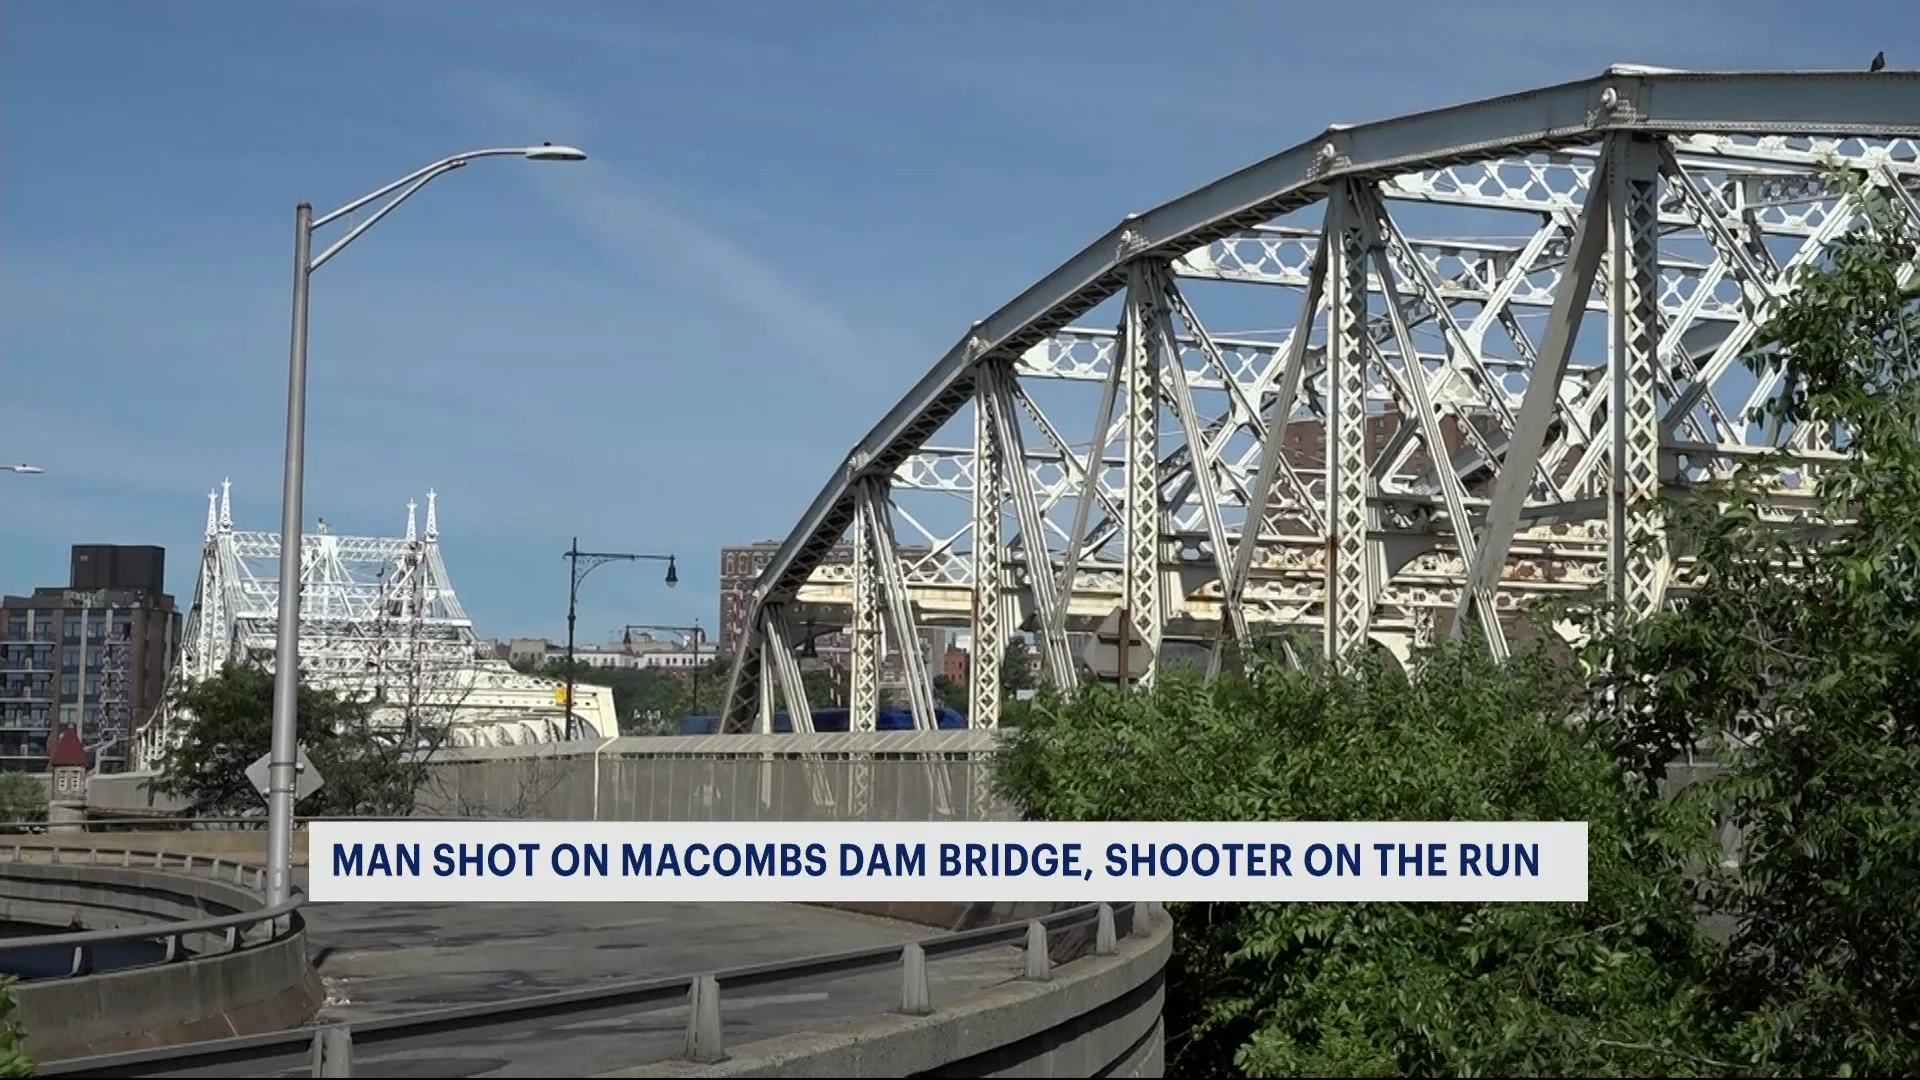 NYPD: 29-year-old man shot on the Macombs Dam Bridge